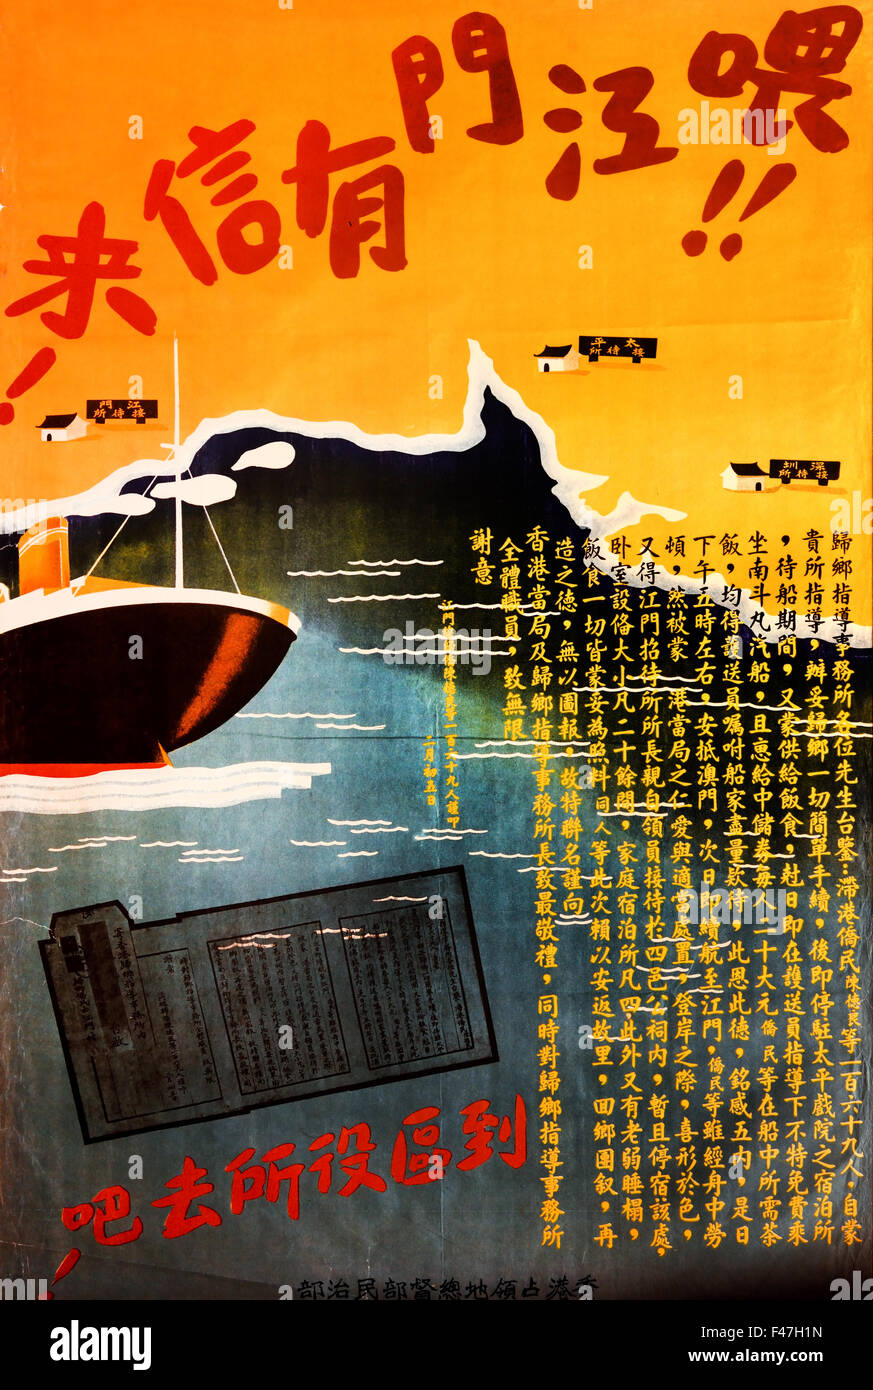 Propaganda poster on the repatriation policy  Museum of History Hong Kong Chinese China Stock Photo